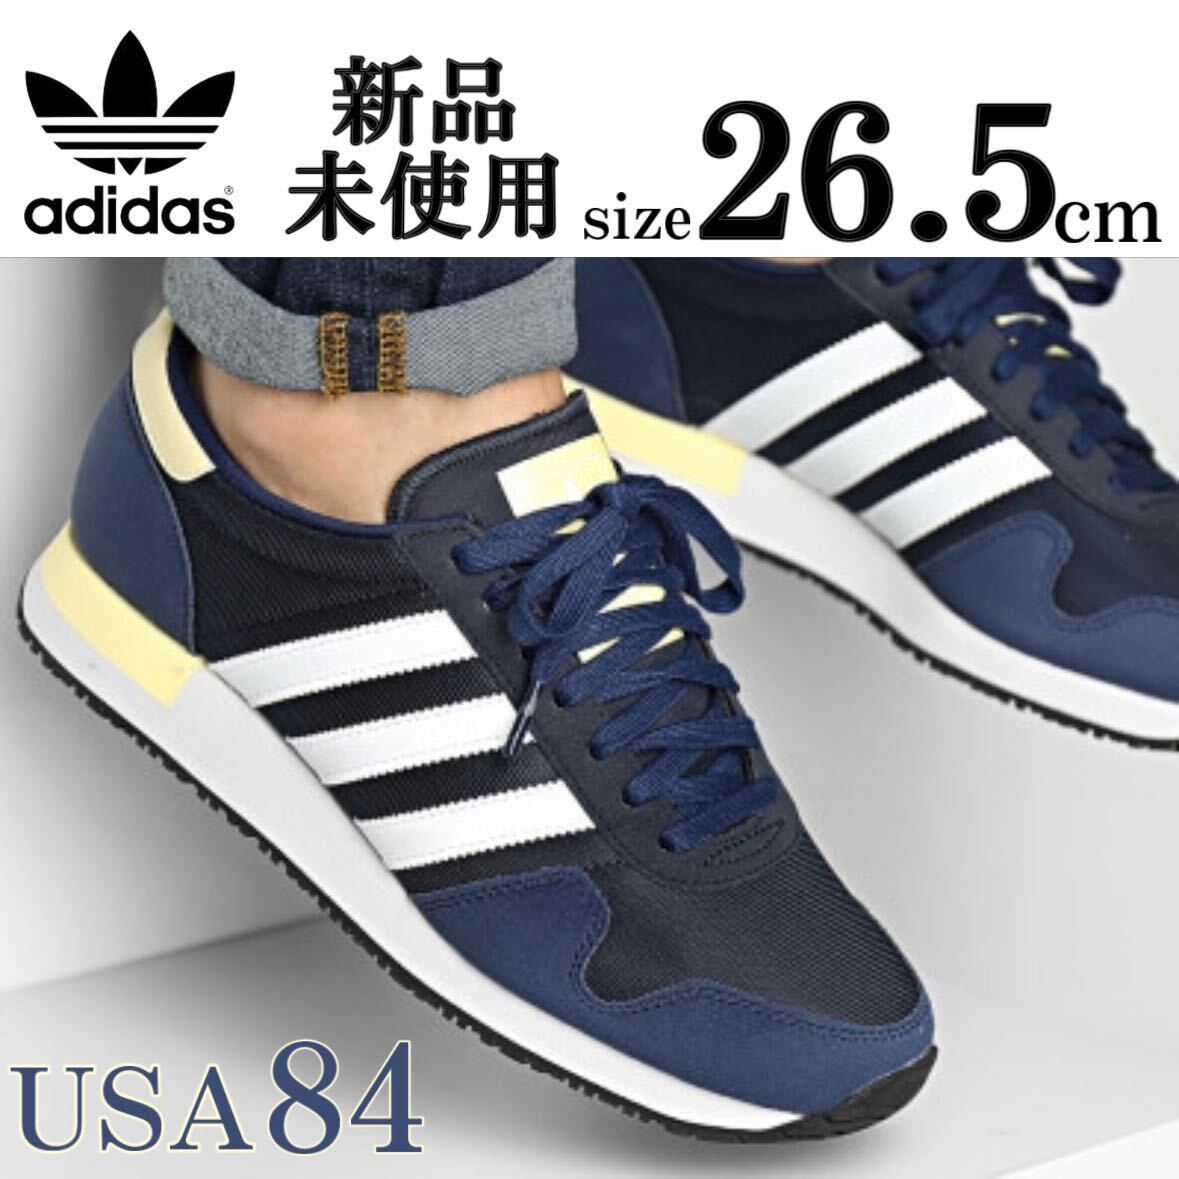 1 jpy ~ 26.5cm USA 84 Adidas Originals adidas originals standard sneakers modern sport running sneakers navy navy blue 